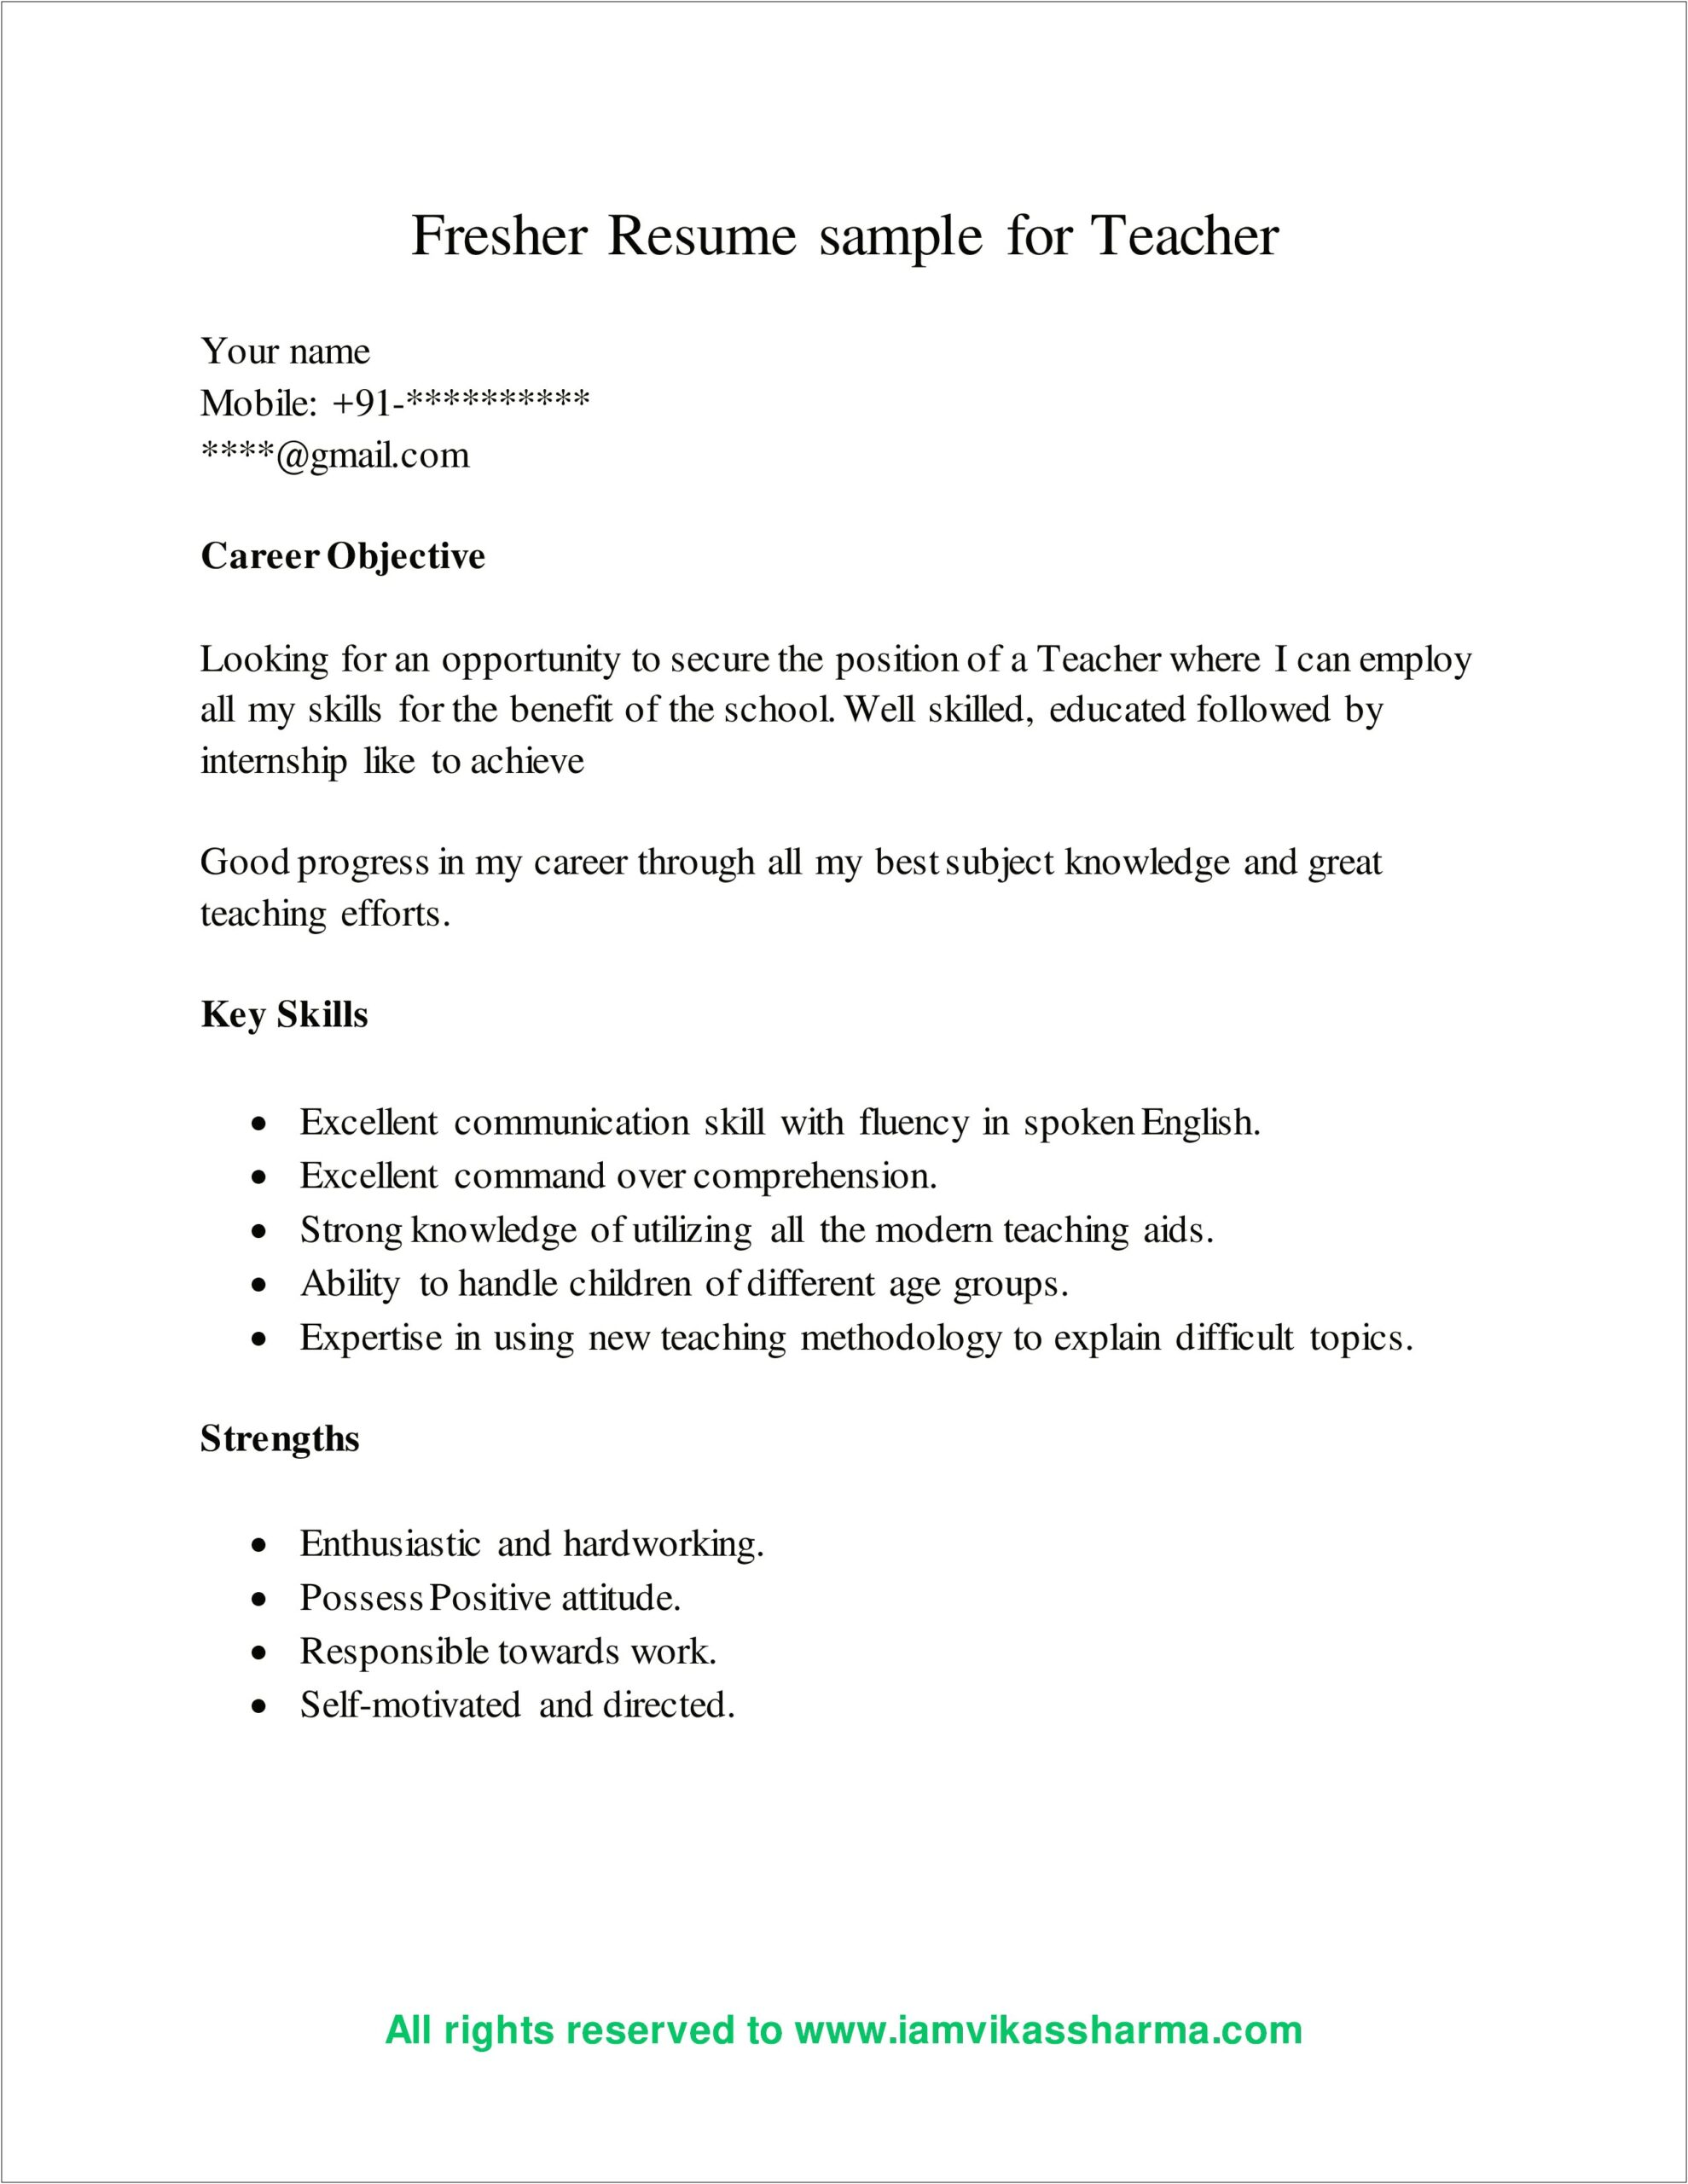 Resume Proforma For Teaching Job